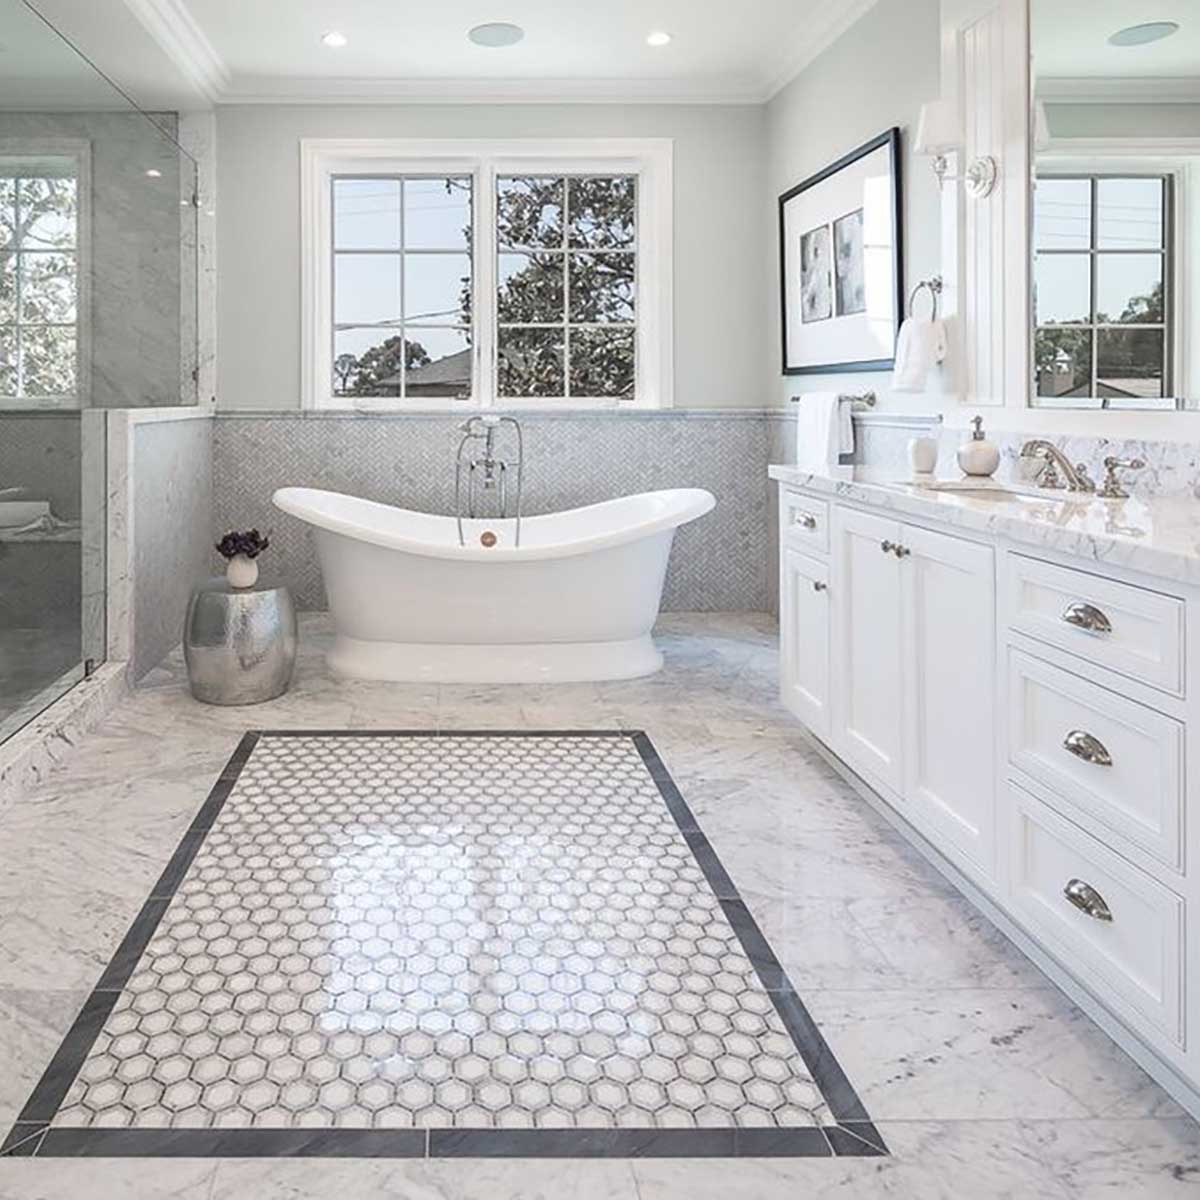 Plan a Bathroom Remodel: Capitol Kitchens & Baths Design Experts NYC